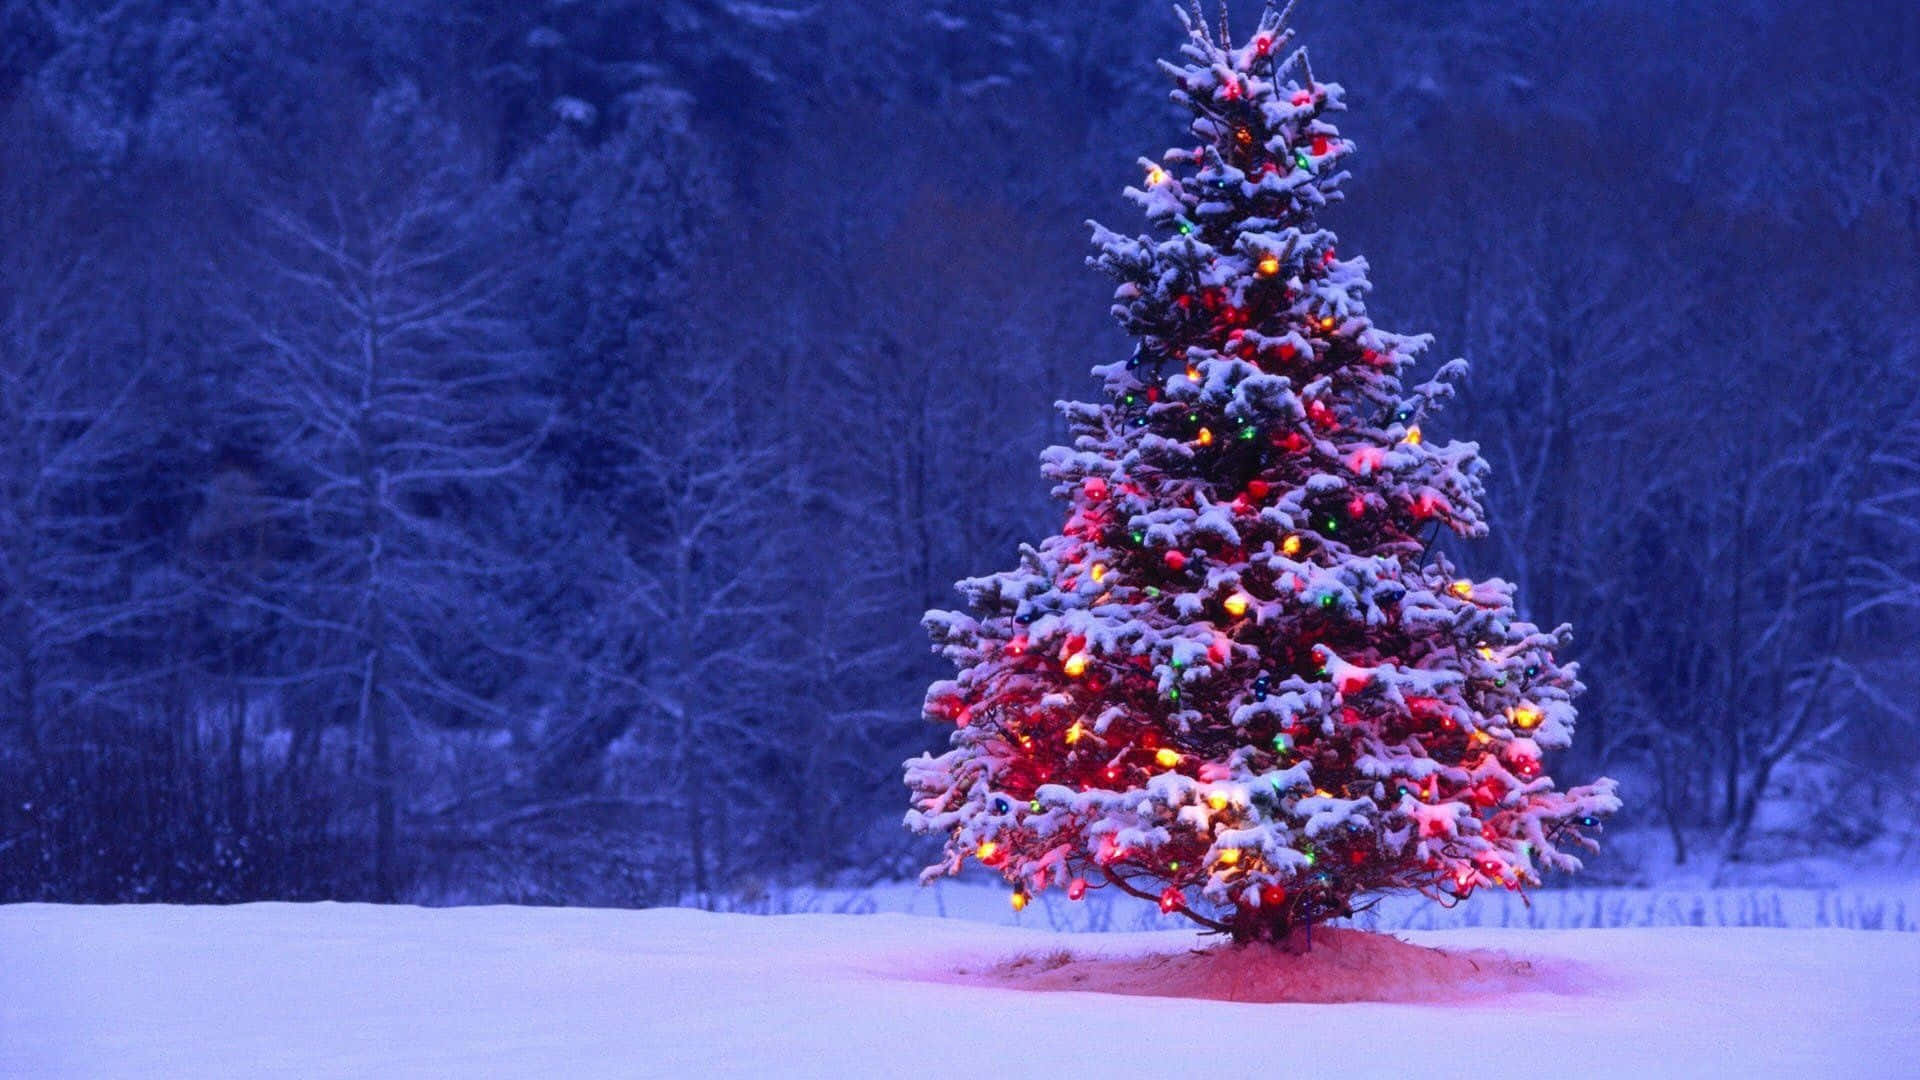 Enjoy the Festive Season with this Beautiful Christmas Desktop Wallpaper